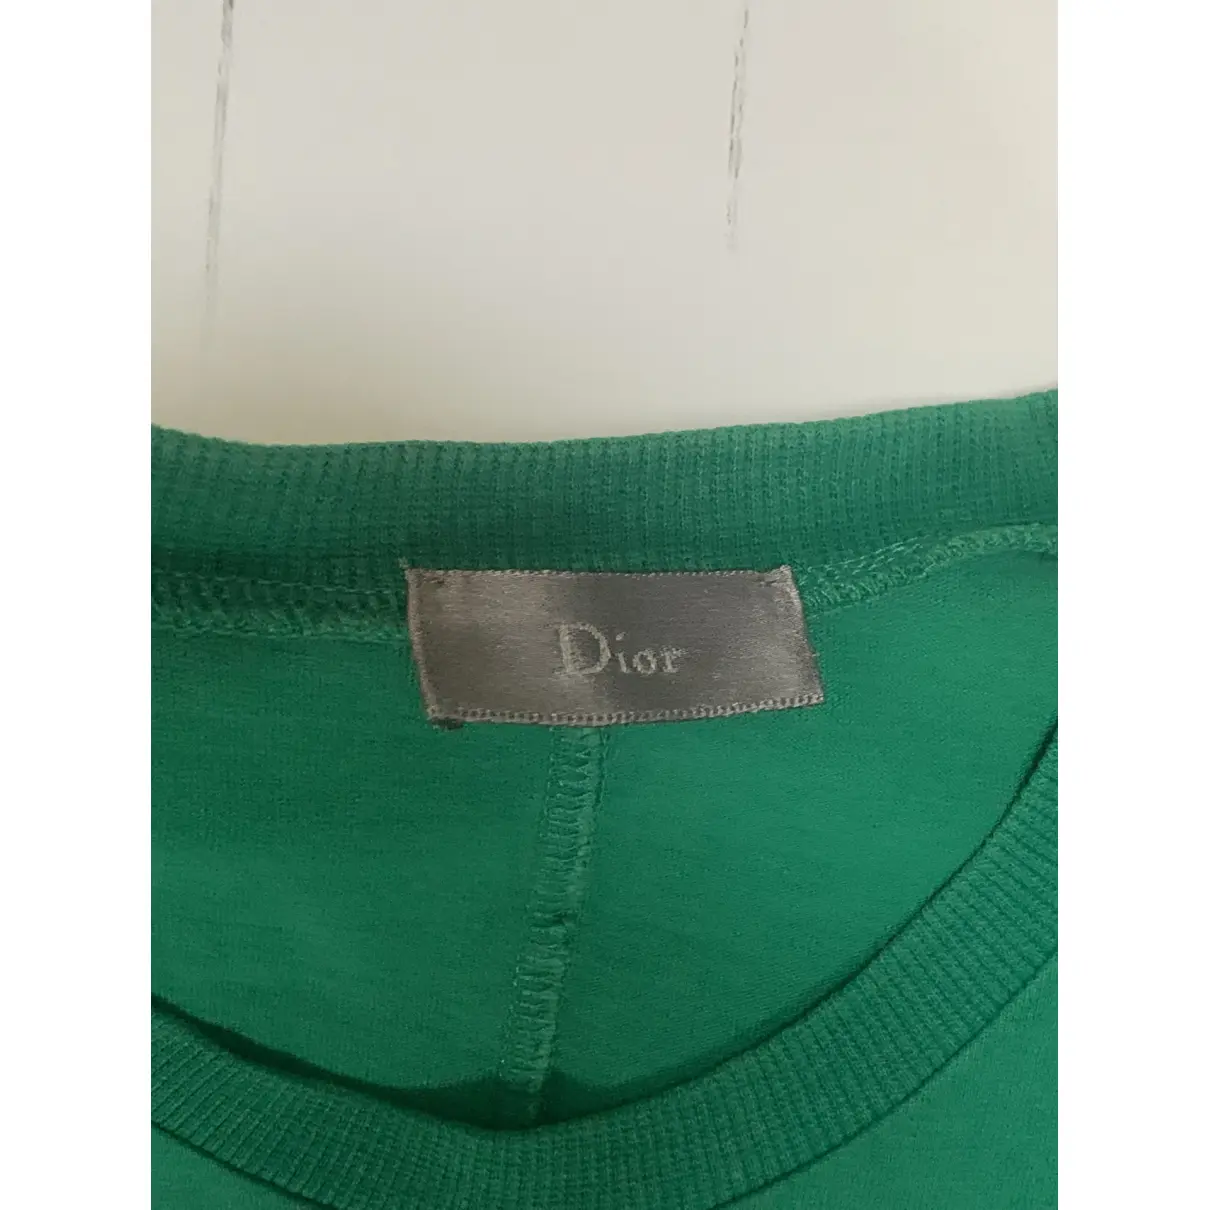 Buy Dior Homme T-shirt online